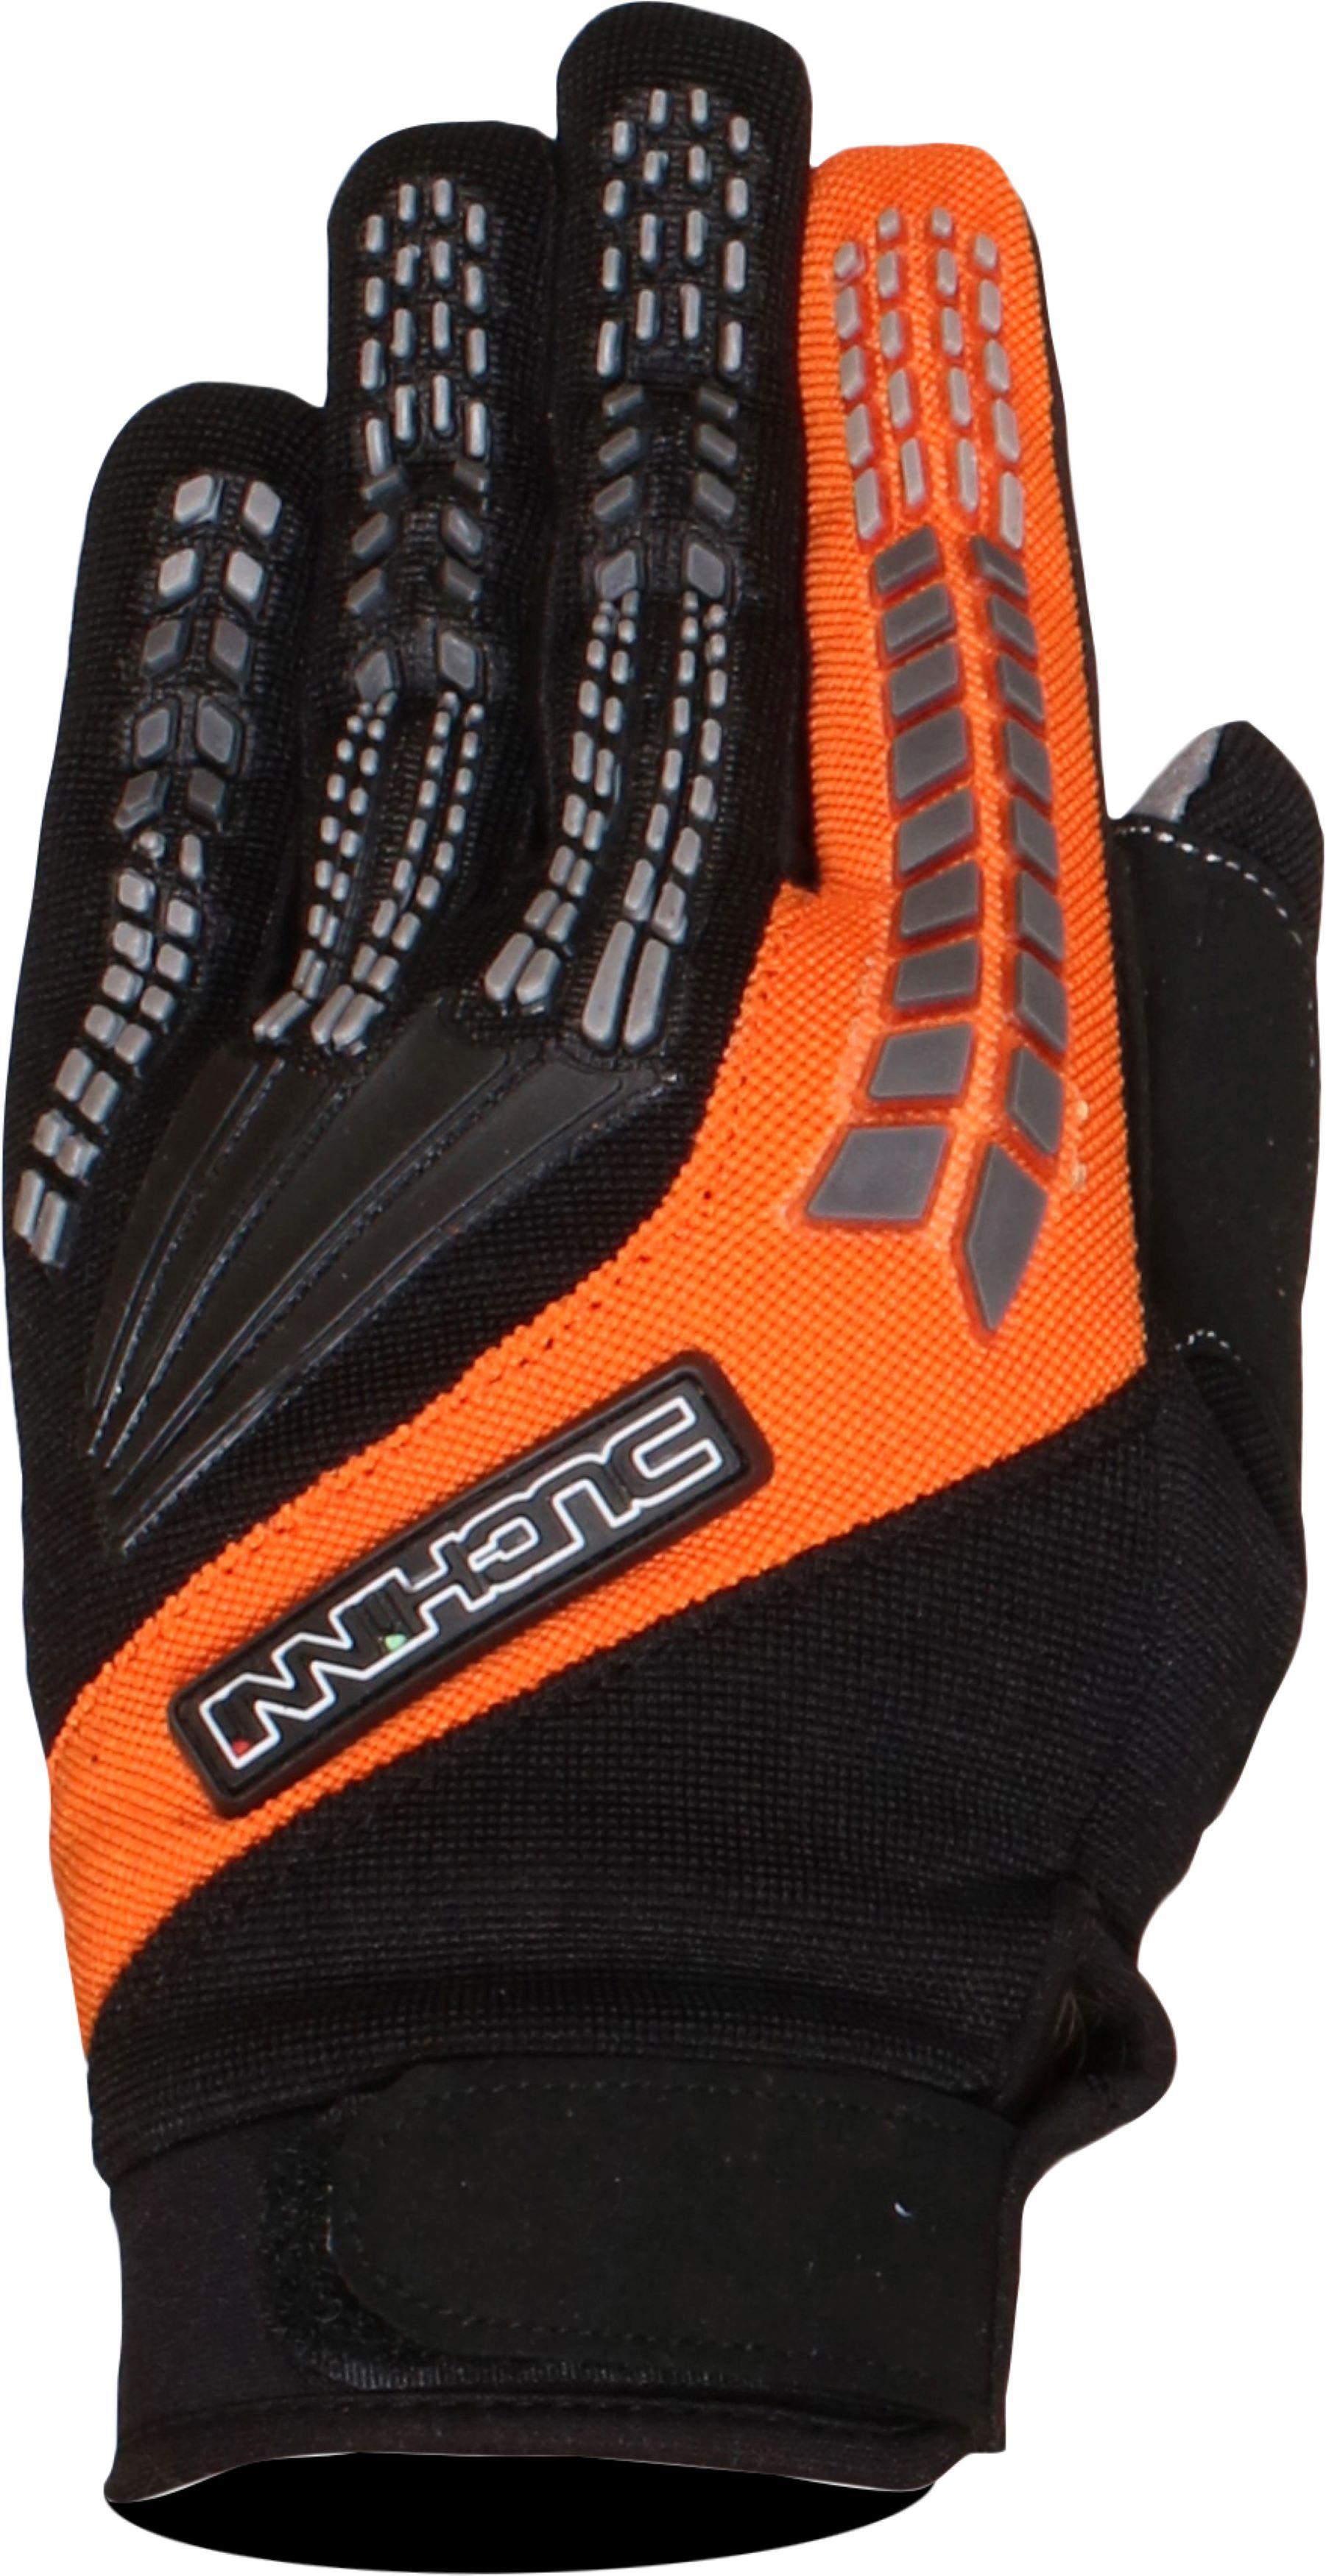 Duchinni Focus Motorcycle Gloves - Black And Orange, L